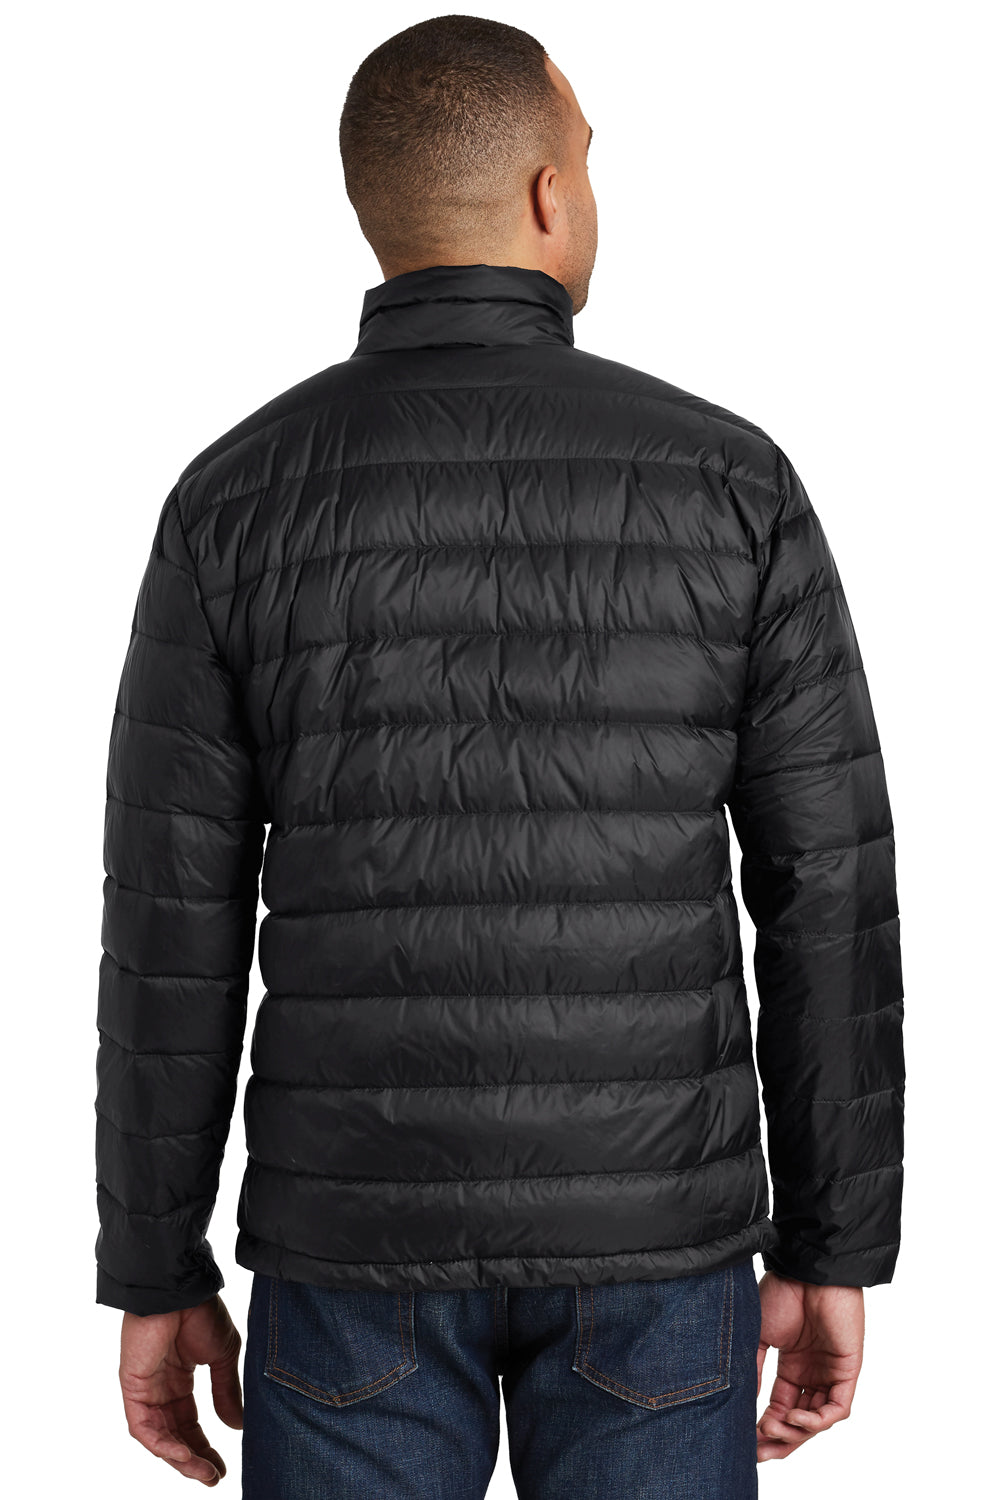 Port Authority J323 Mens Wind & Water Resistant Full Zip Down Jacket Black Back